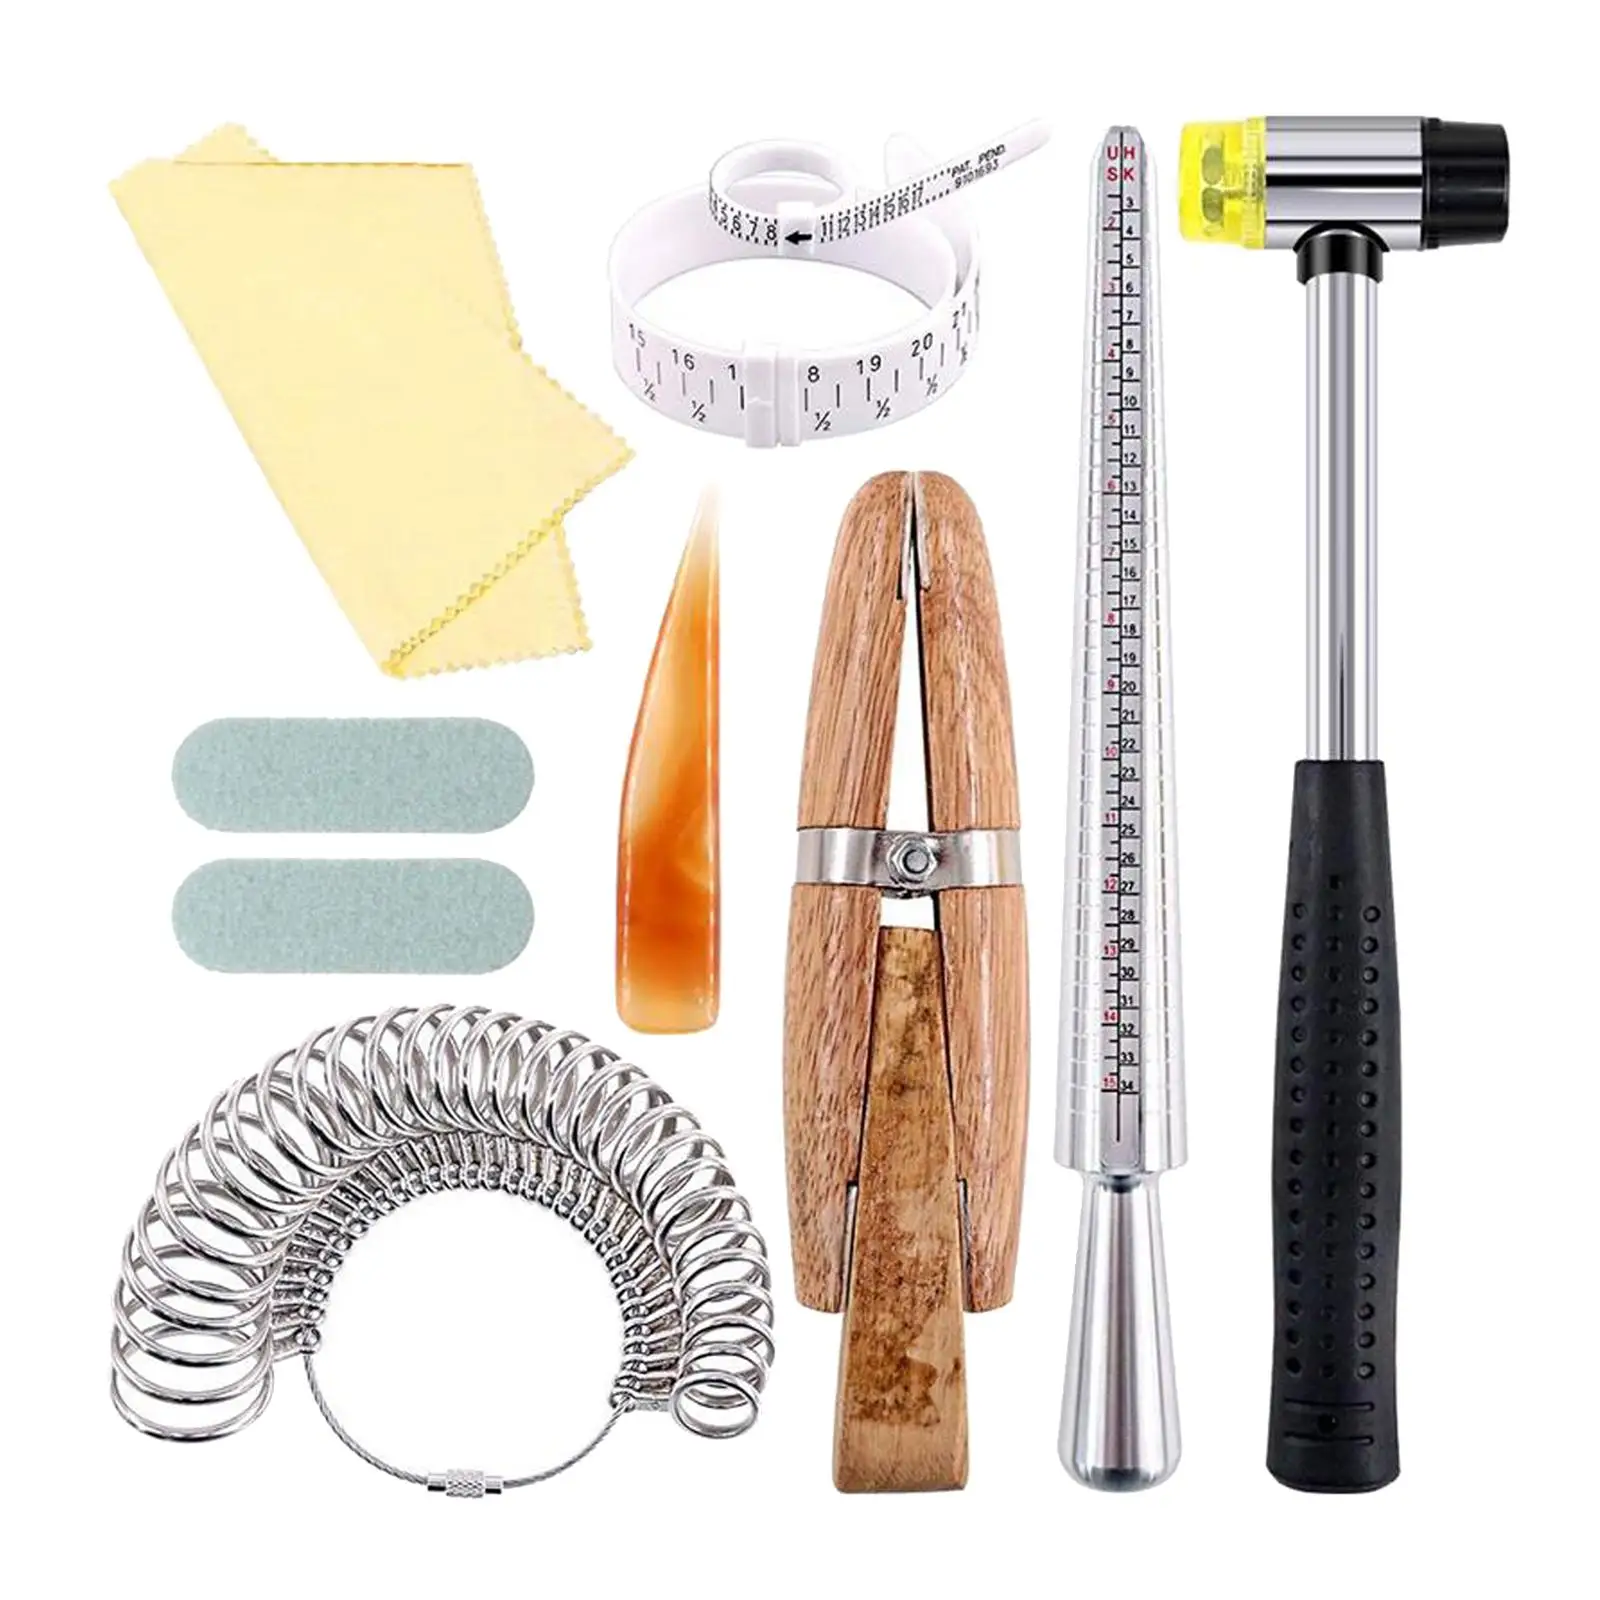 12 Pieces Professional Jewelry Making Tool Measu Stick Sizer Kit,Useful for Measu s Diameters